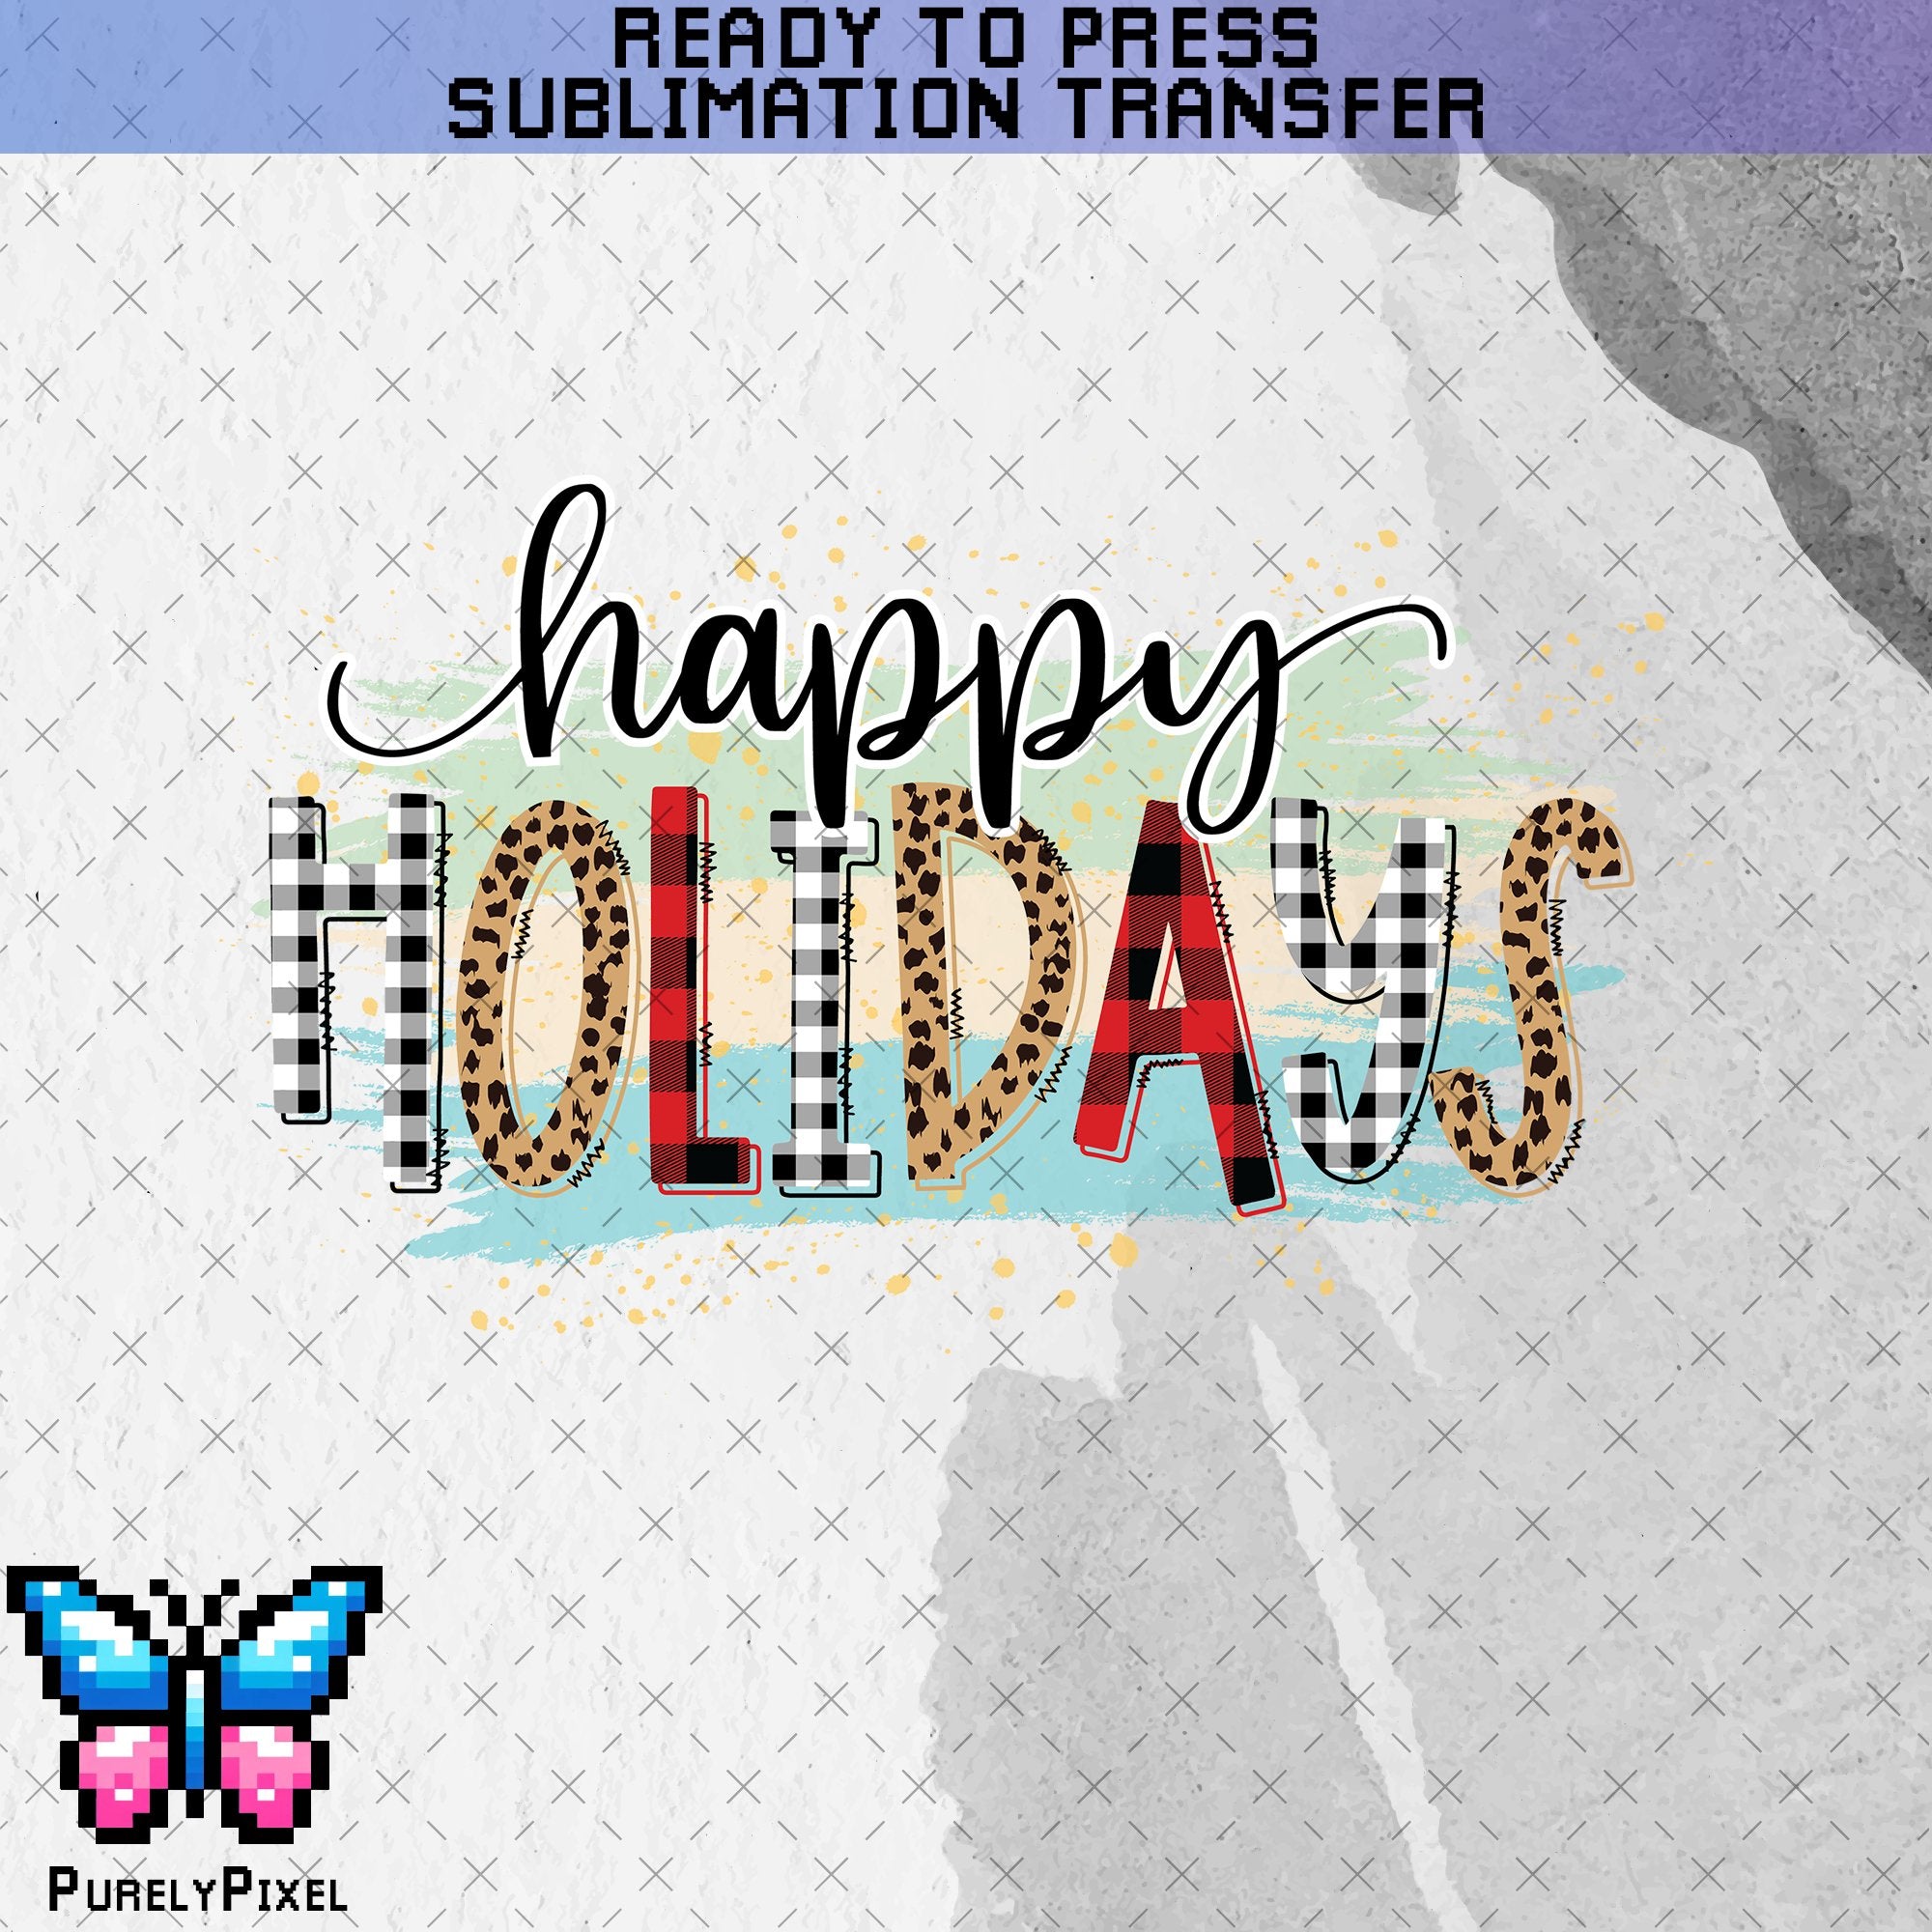 Happy Holidays Sub Transfer | Holiday Buffalo Plaid and Cheetah Print | Ready to Press Sublimation Transfer | PurelyPixels | Sublimation Transfers